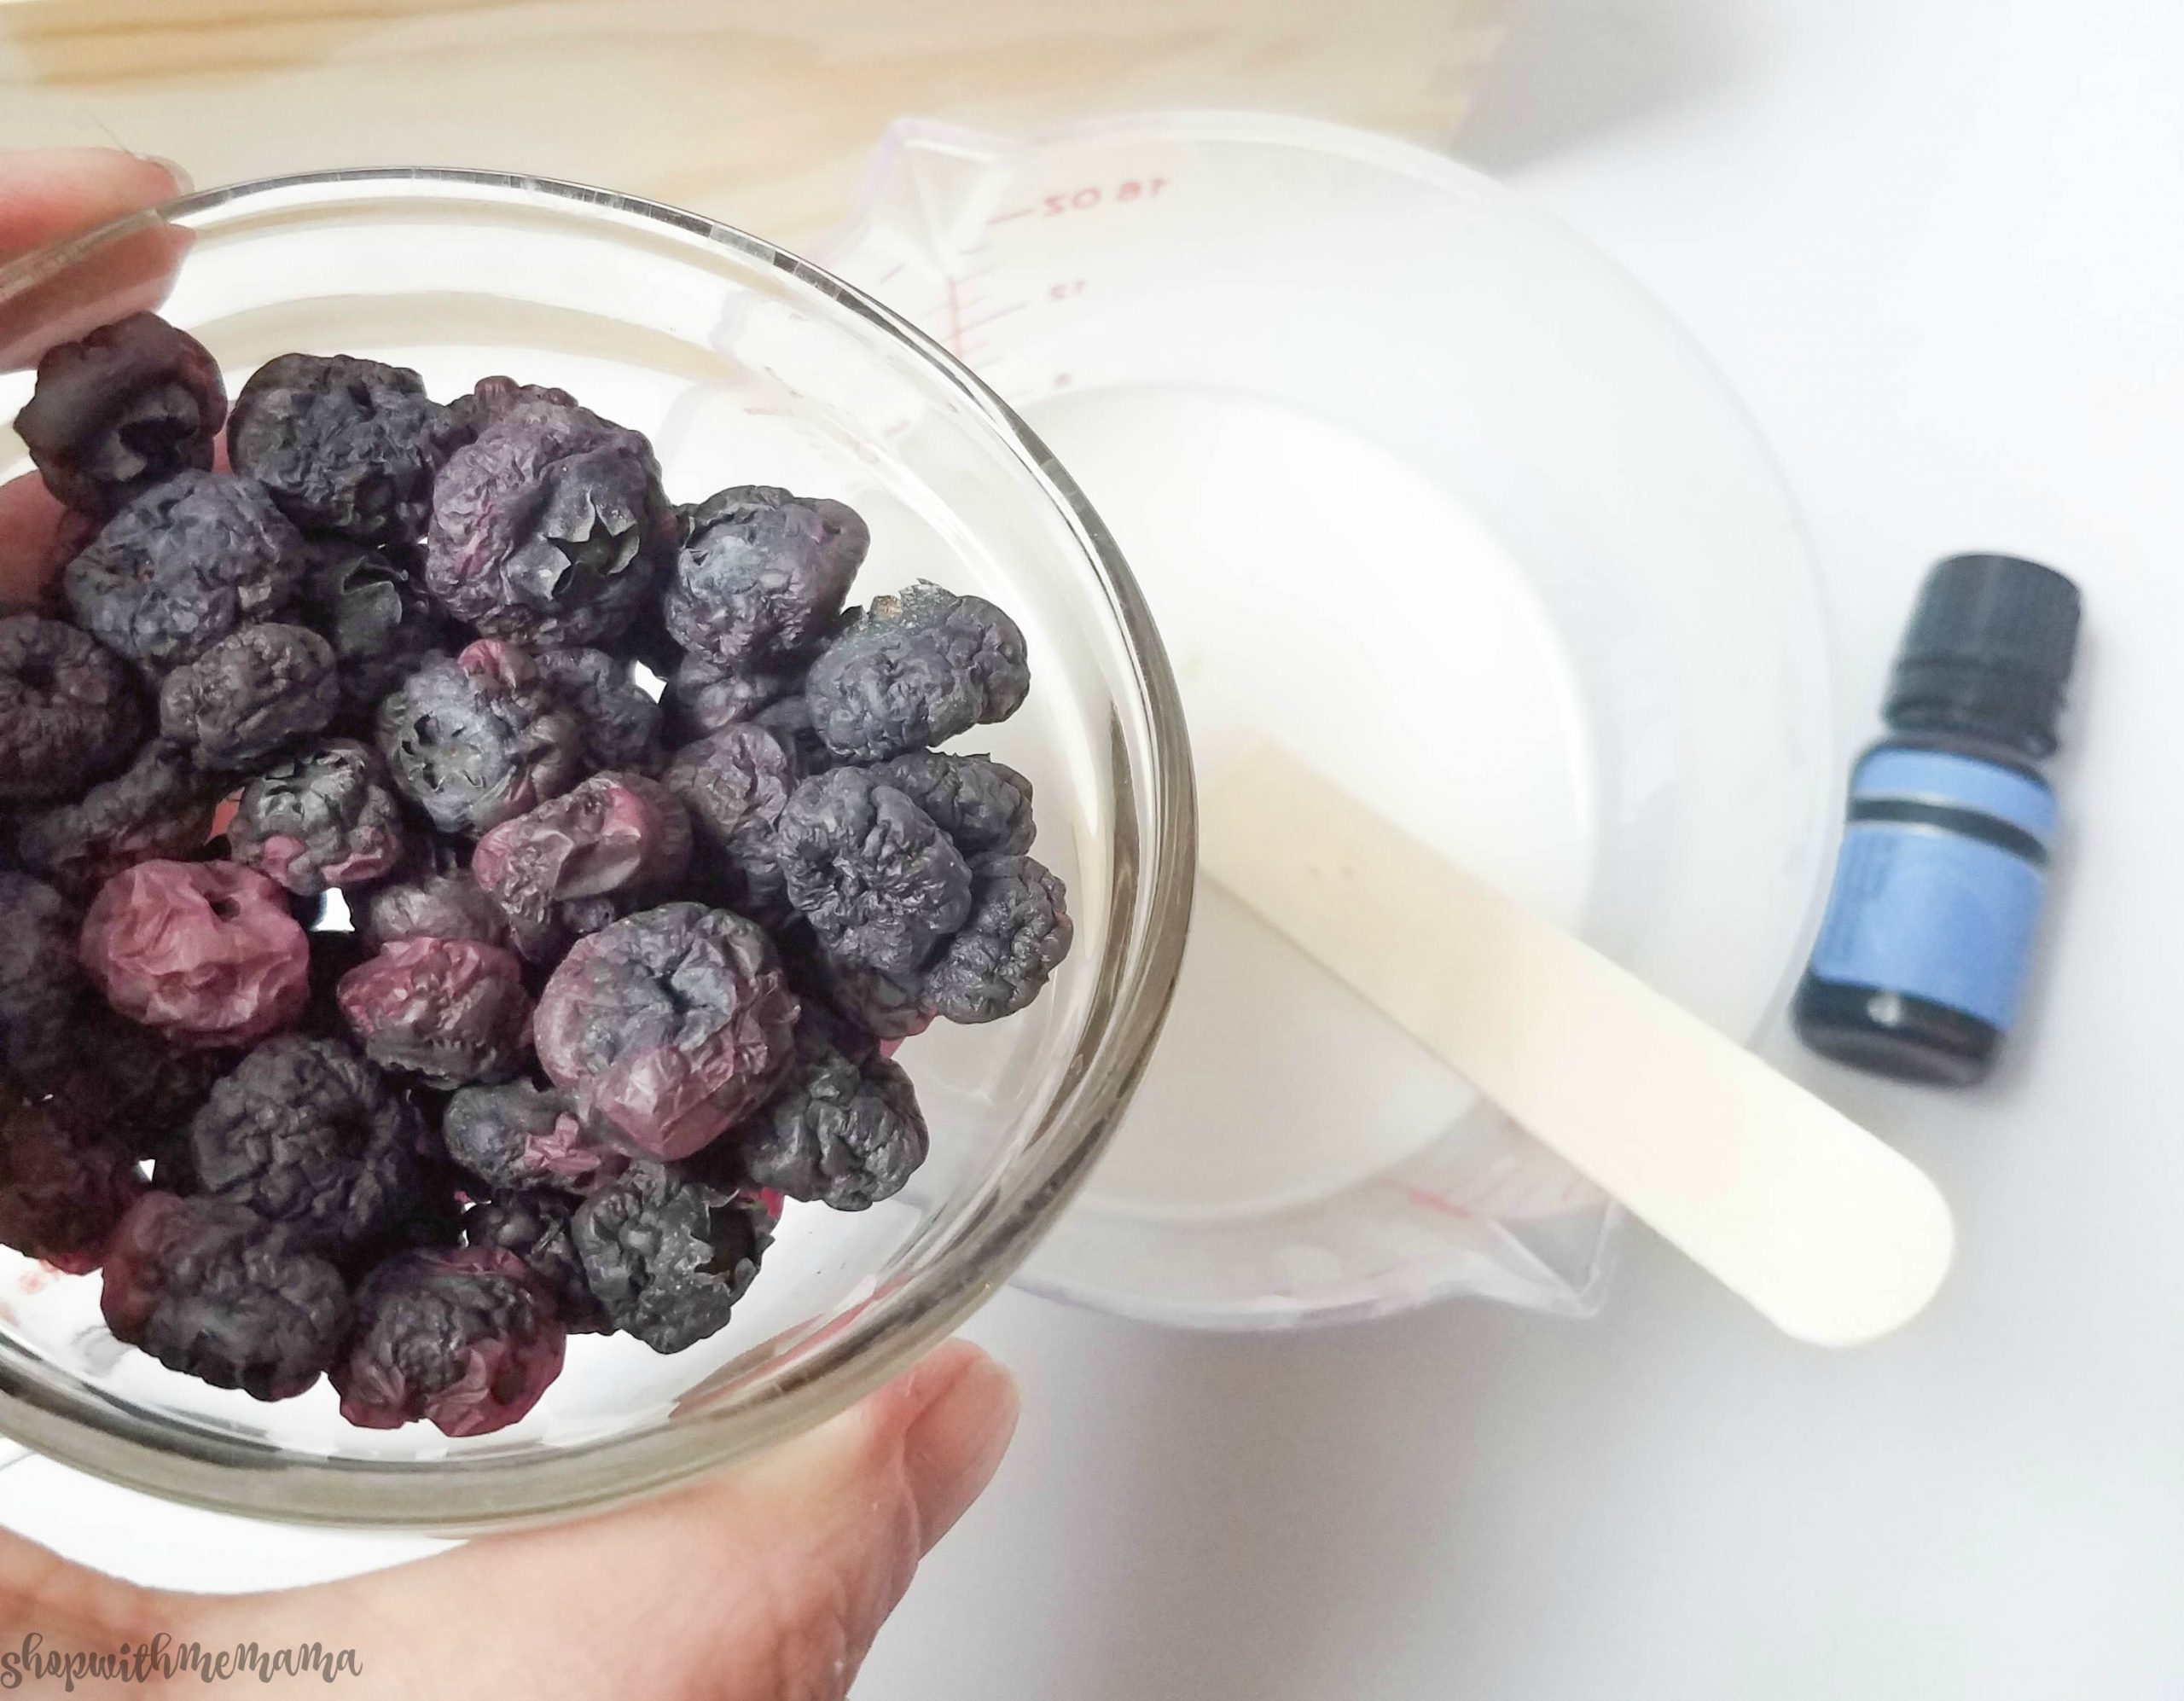 How To Make Blueberry Handmade Soap